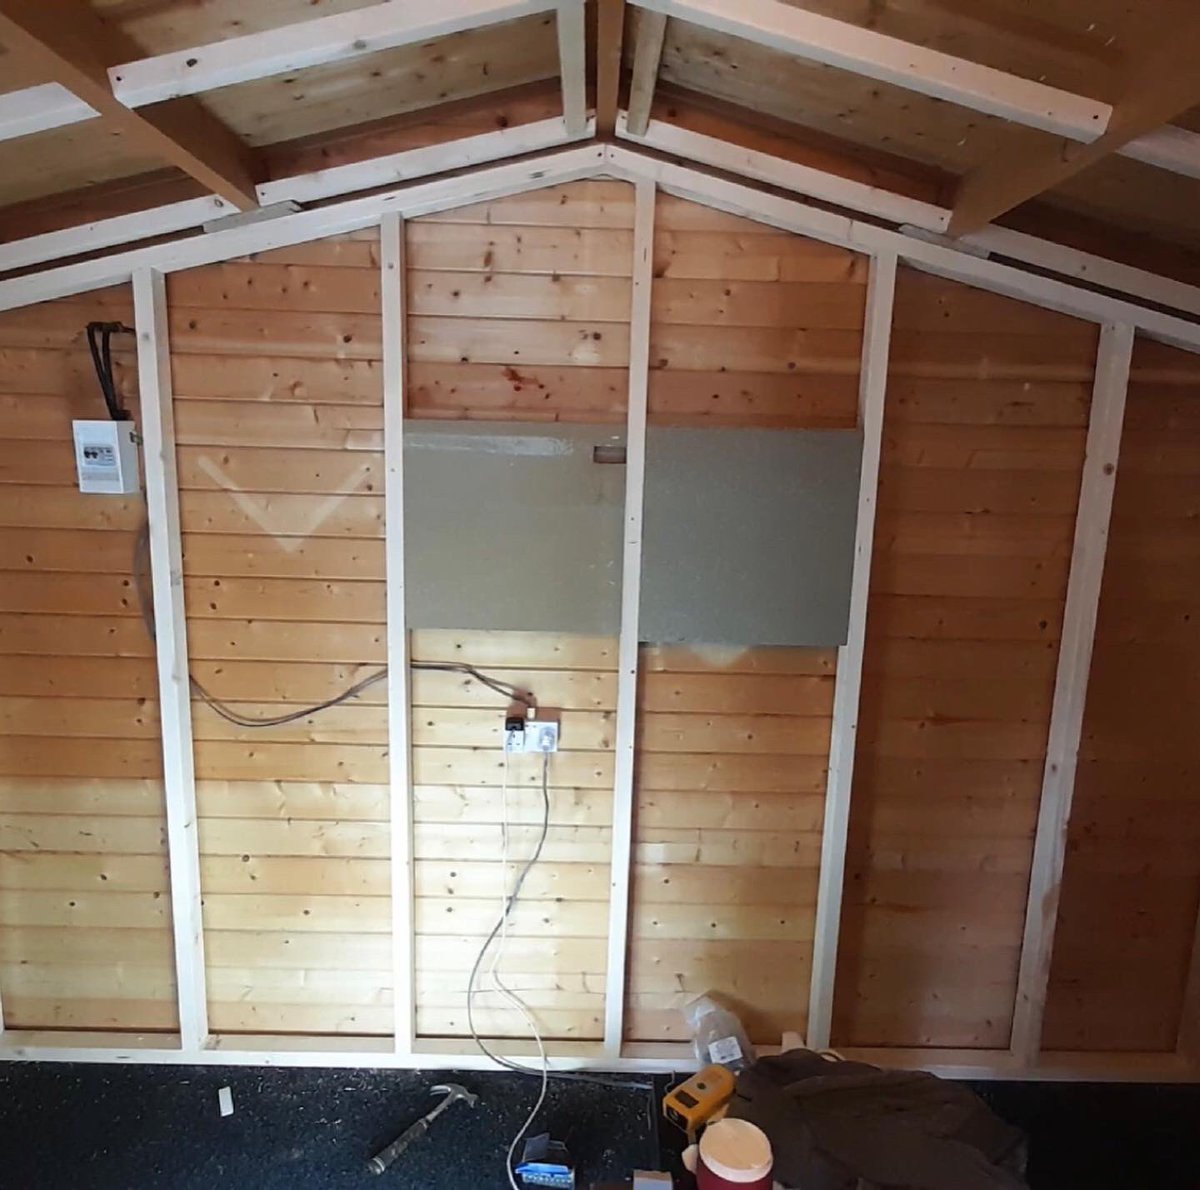 New #HomeStudio in progress. Lining my 5m x 5m cabin adding an isolated internal wall with Rockwool sound insulation. Much more room👌 #GardenCabin #WorkInProgress #MusicStudio #DIYstudio #DIYsoundproofing #Soundproofing #Rockwool #DIYhomeStudio #NewStudio #StudWalls #WoodenCabin